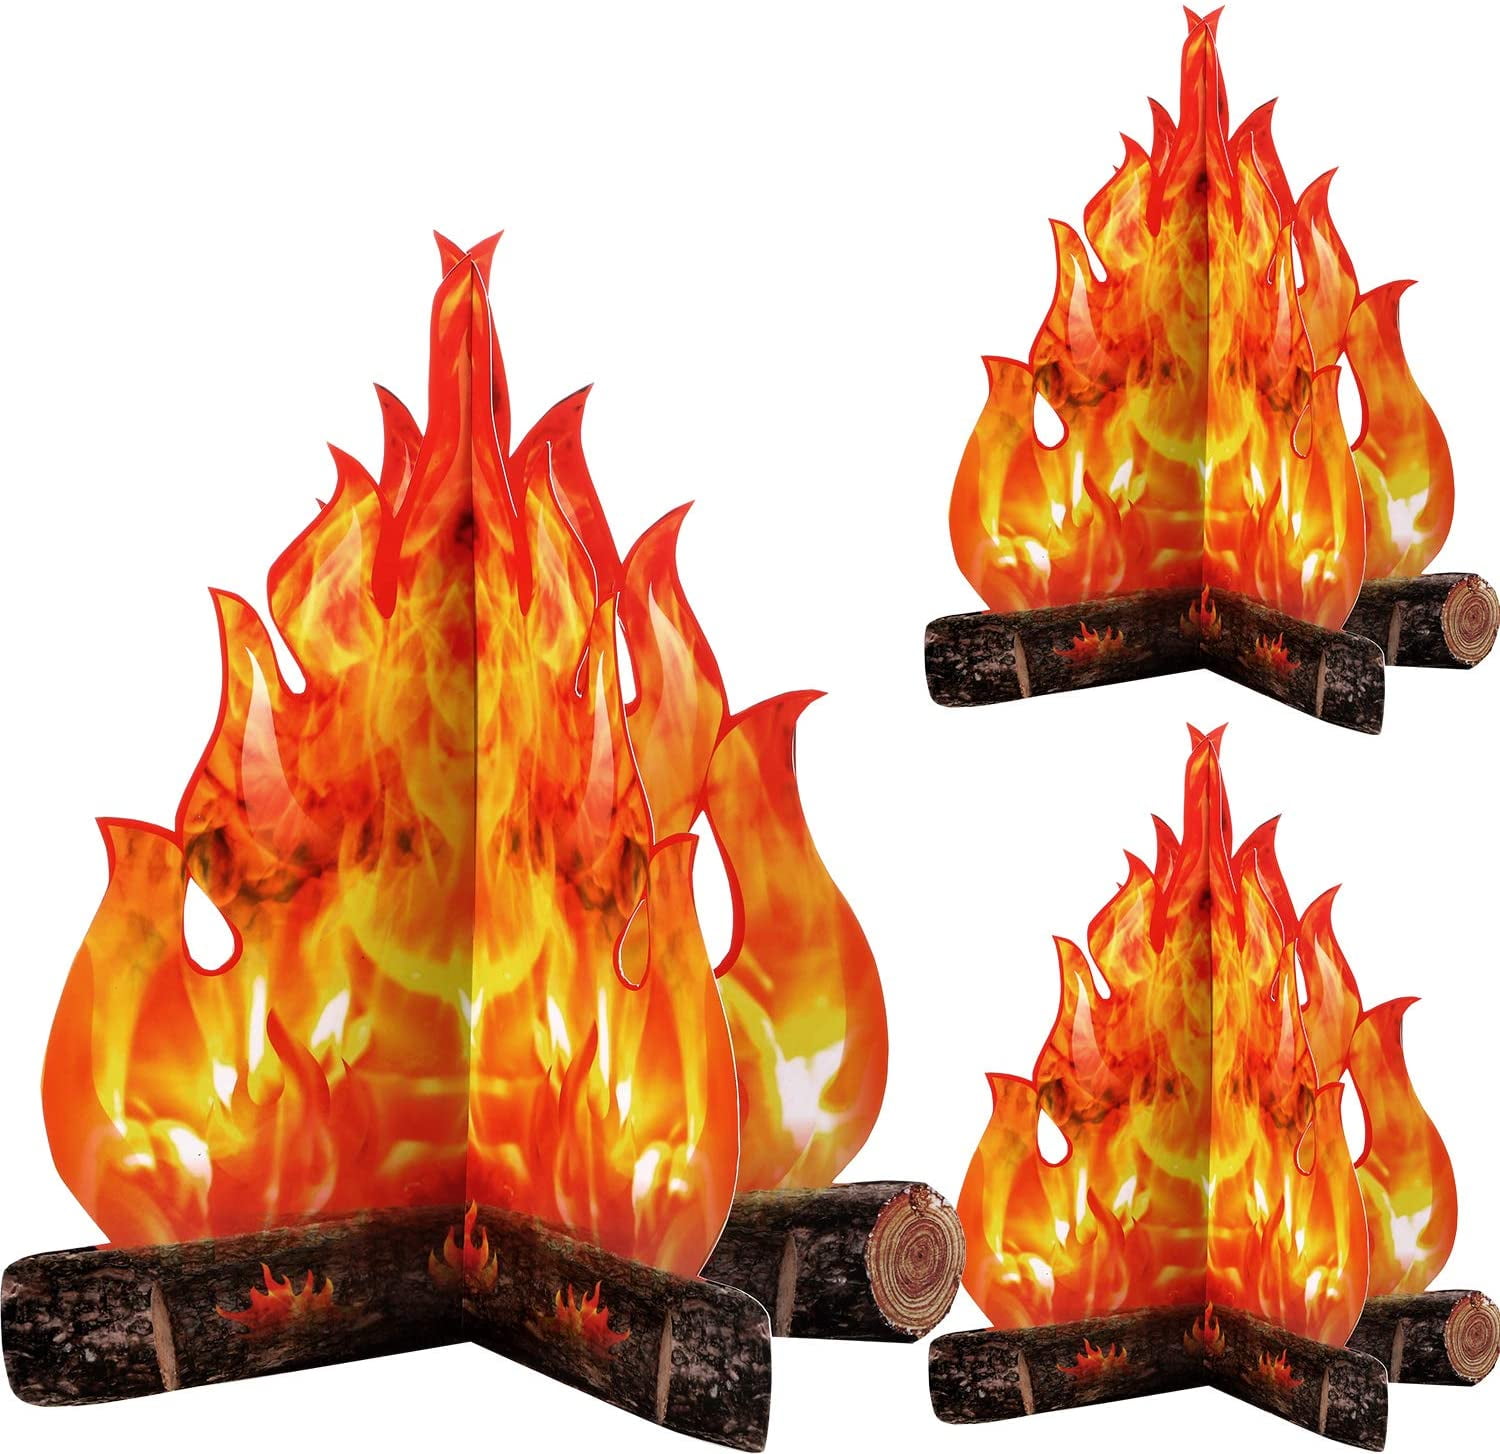 3D Decorative Cardboard Campfire Centerpiece Artificial Fire Fake Flame Paper Party Decorative Flame Torch Gold Orange, 2 Set